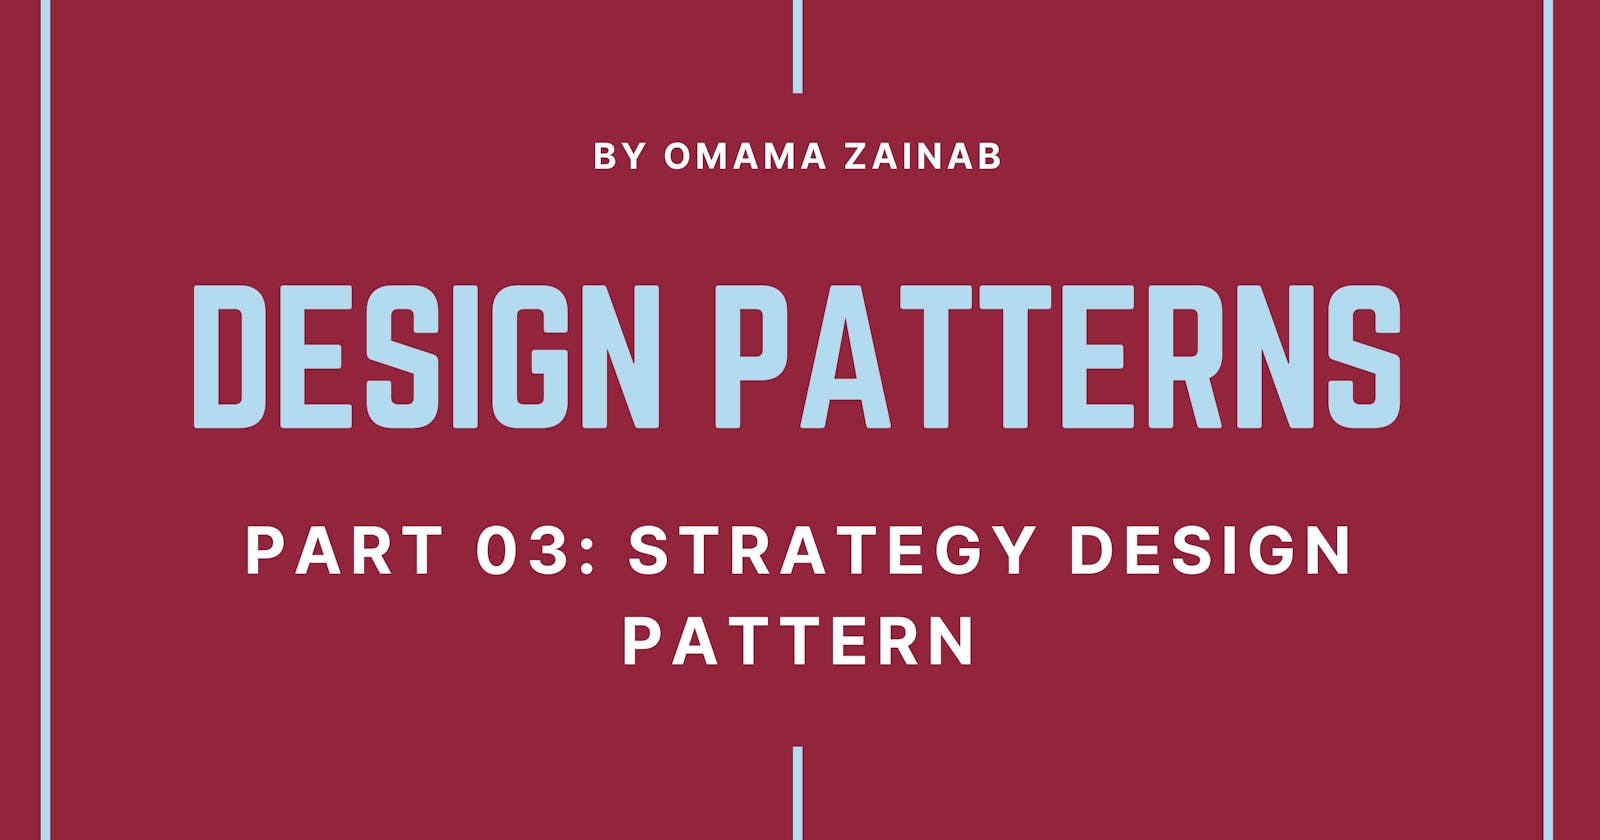 Part 04: Strategy Design Pattern